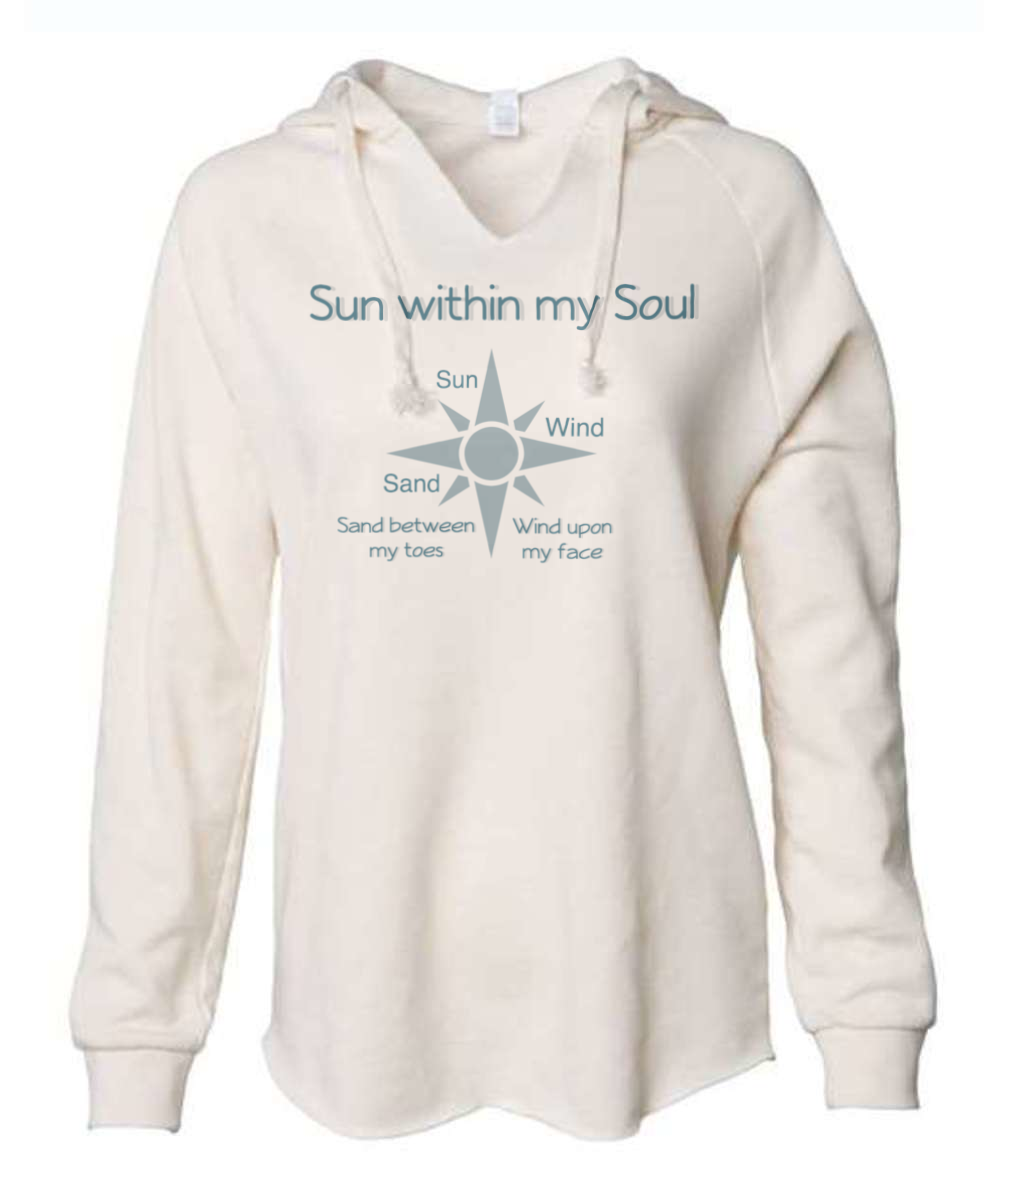 sun within my soul hoodie sweatshirt Jacqueline MB designs 